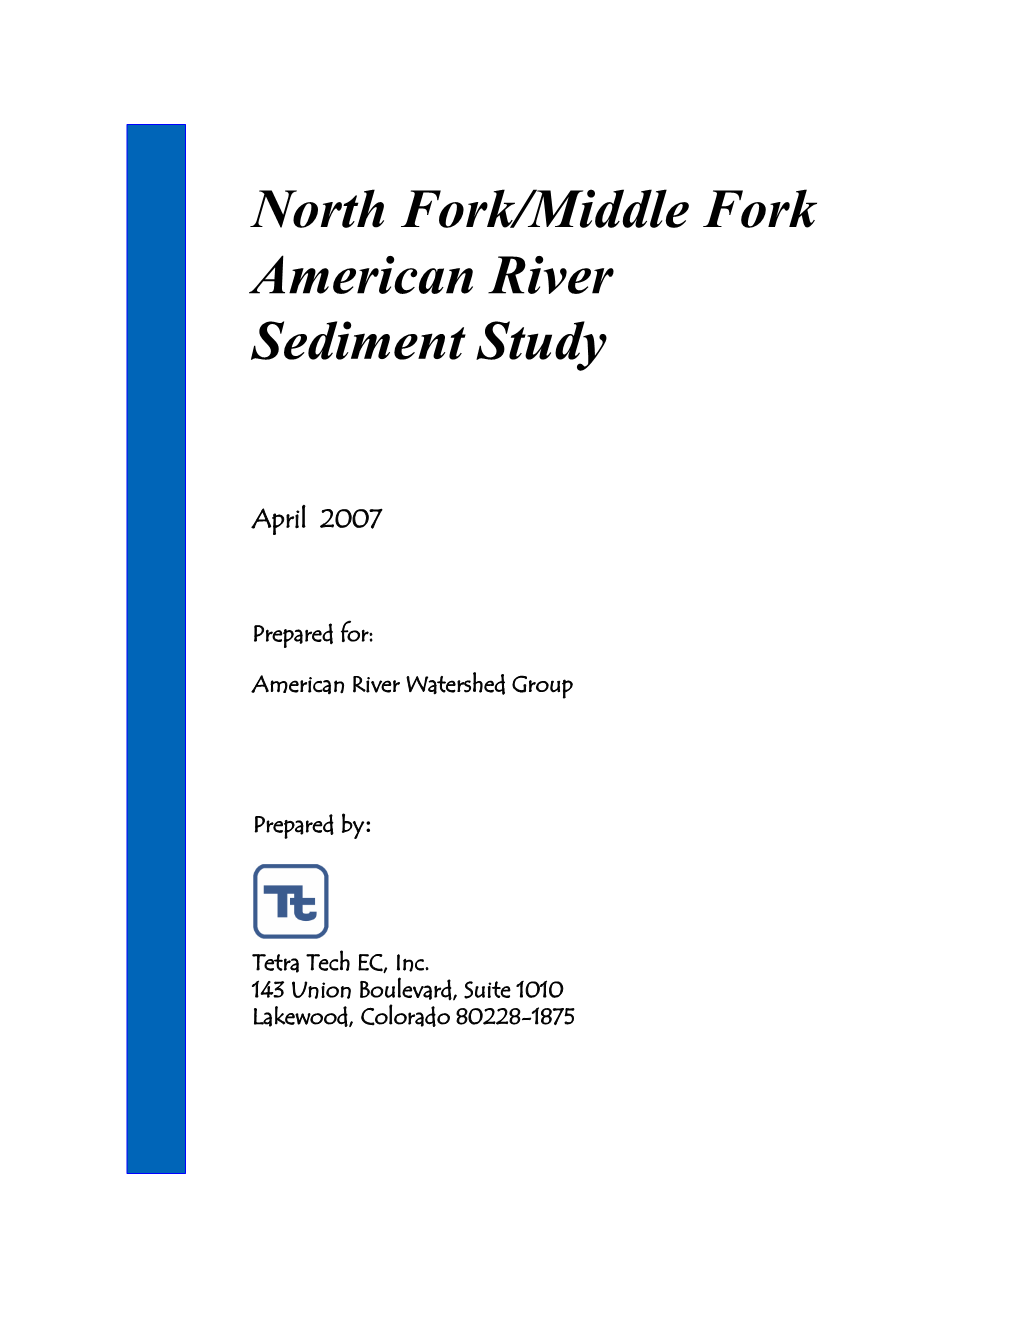 North Fork/Middle Fork American River Sediment Study